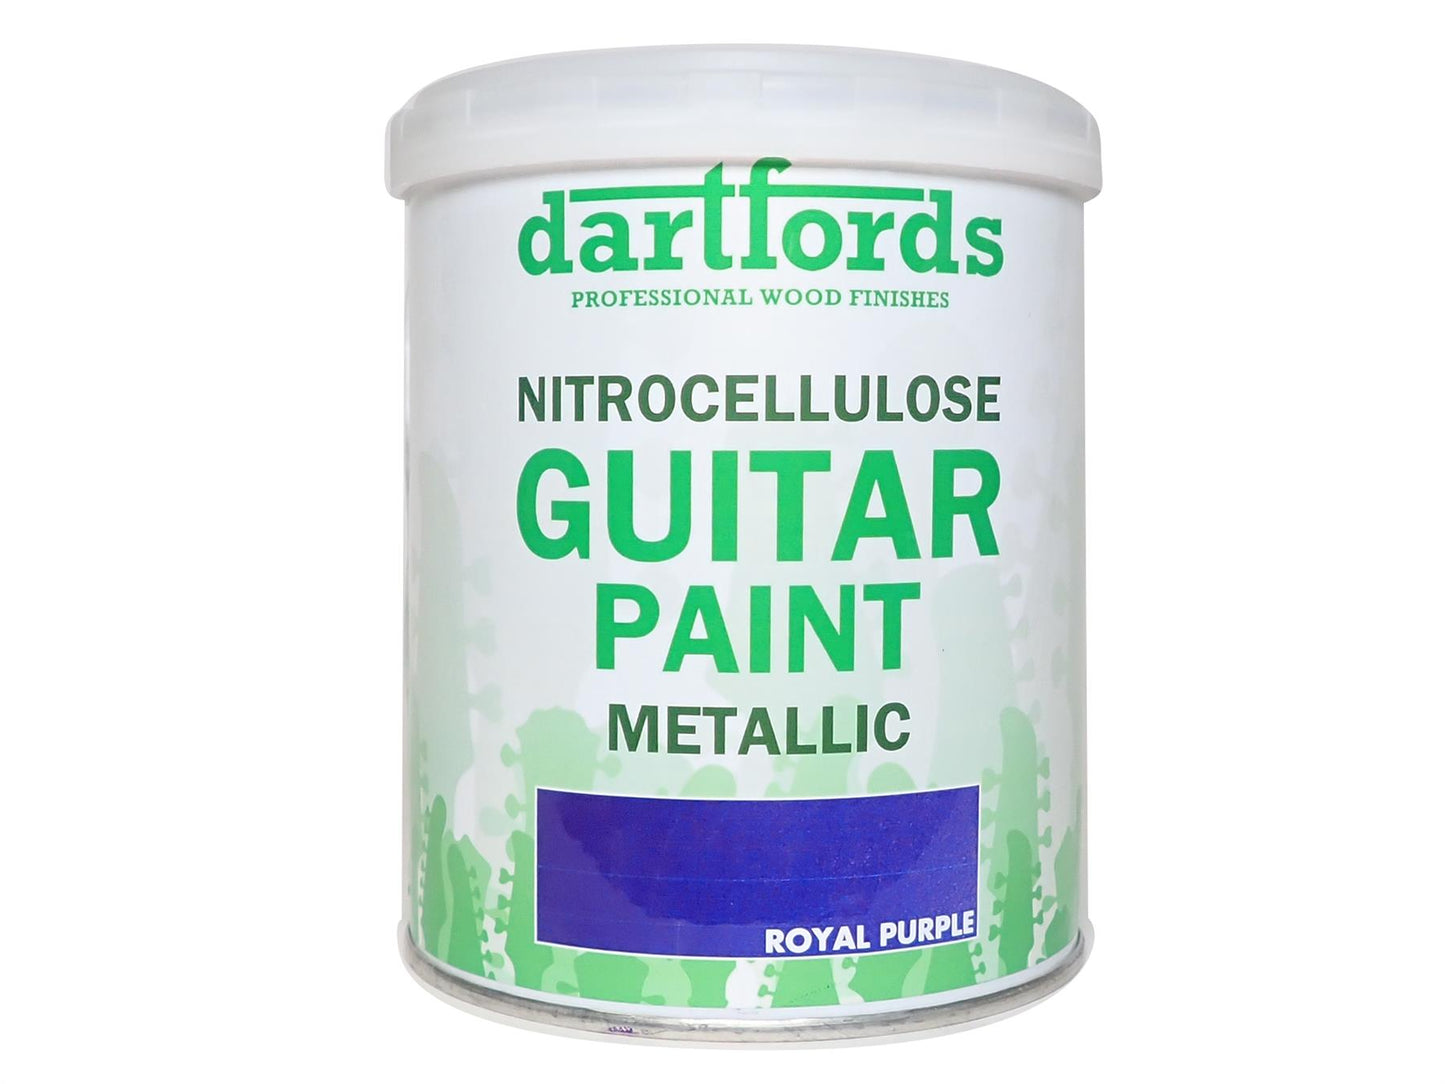 dartfords Royal Purple Metallic Nitrocellulose Guitar Paint - 1 litre Tin